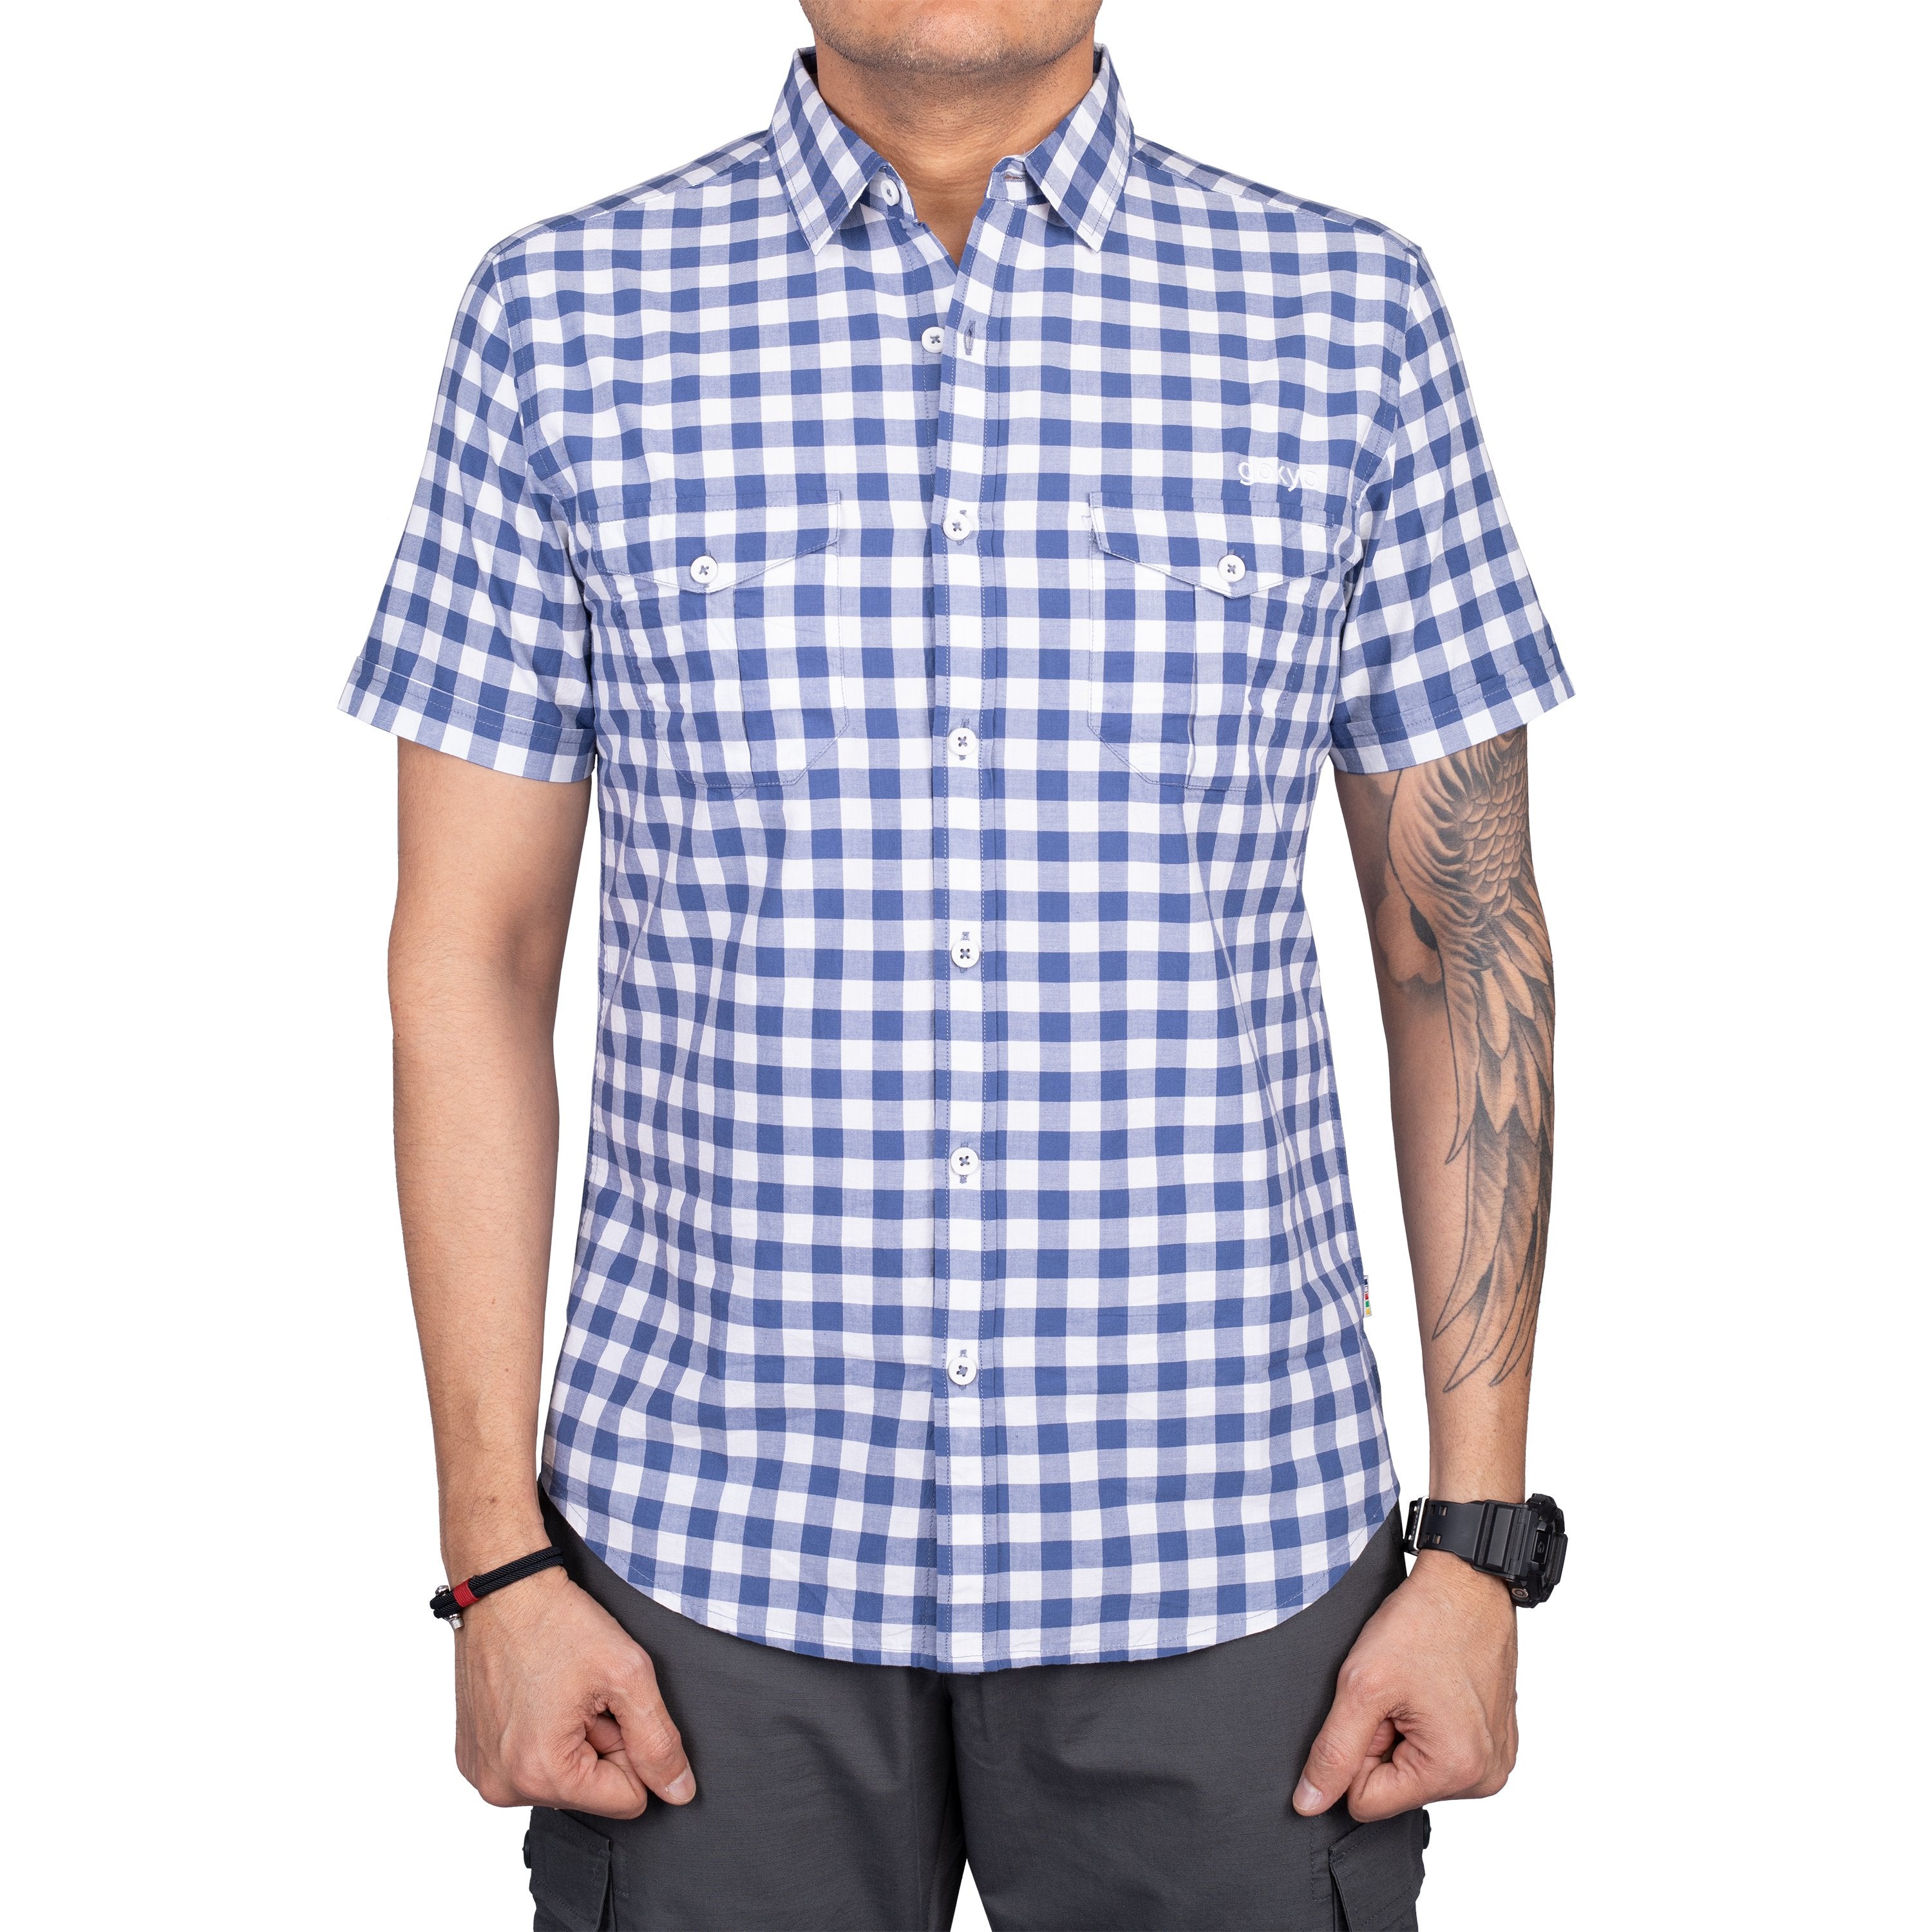 Buy Gokyo Corbett Cargo Half Sleeve Shirt Blue | Shirts at Gokyo Outdoor Clothing & Gear